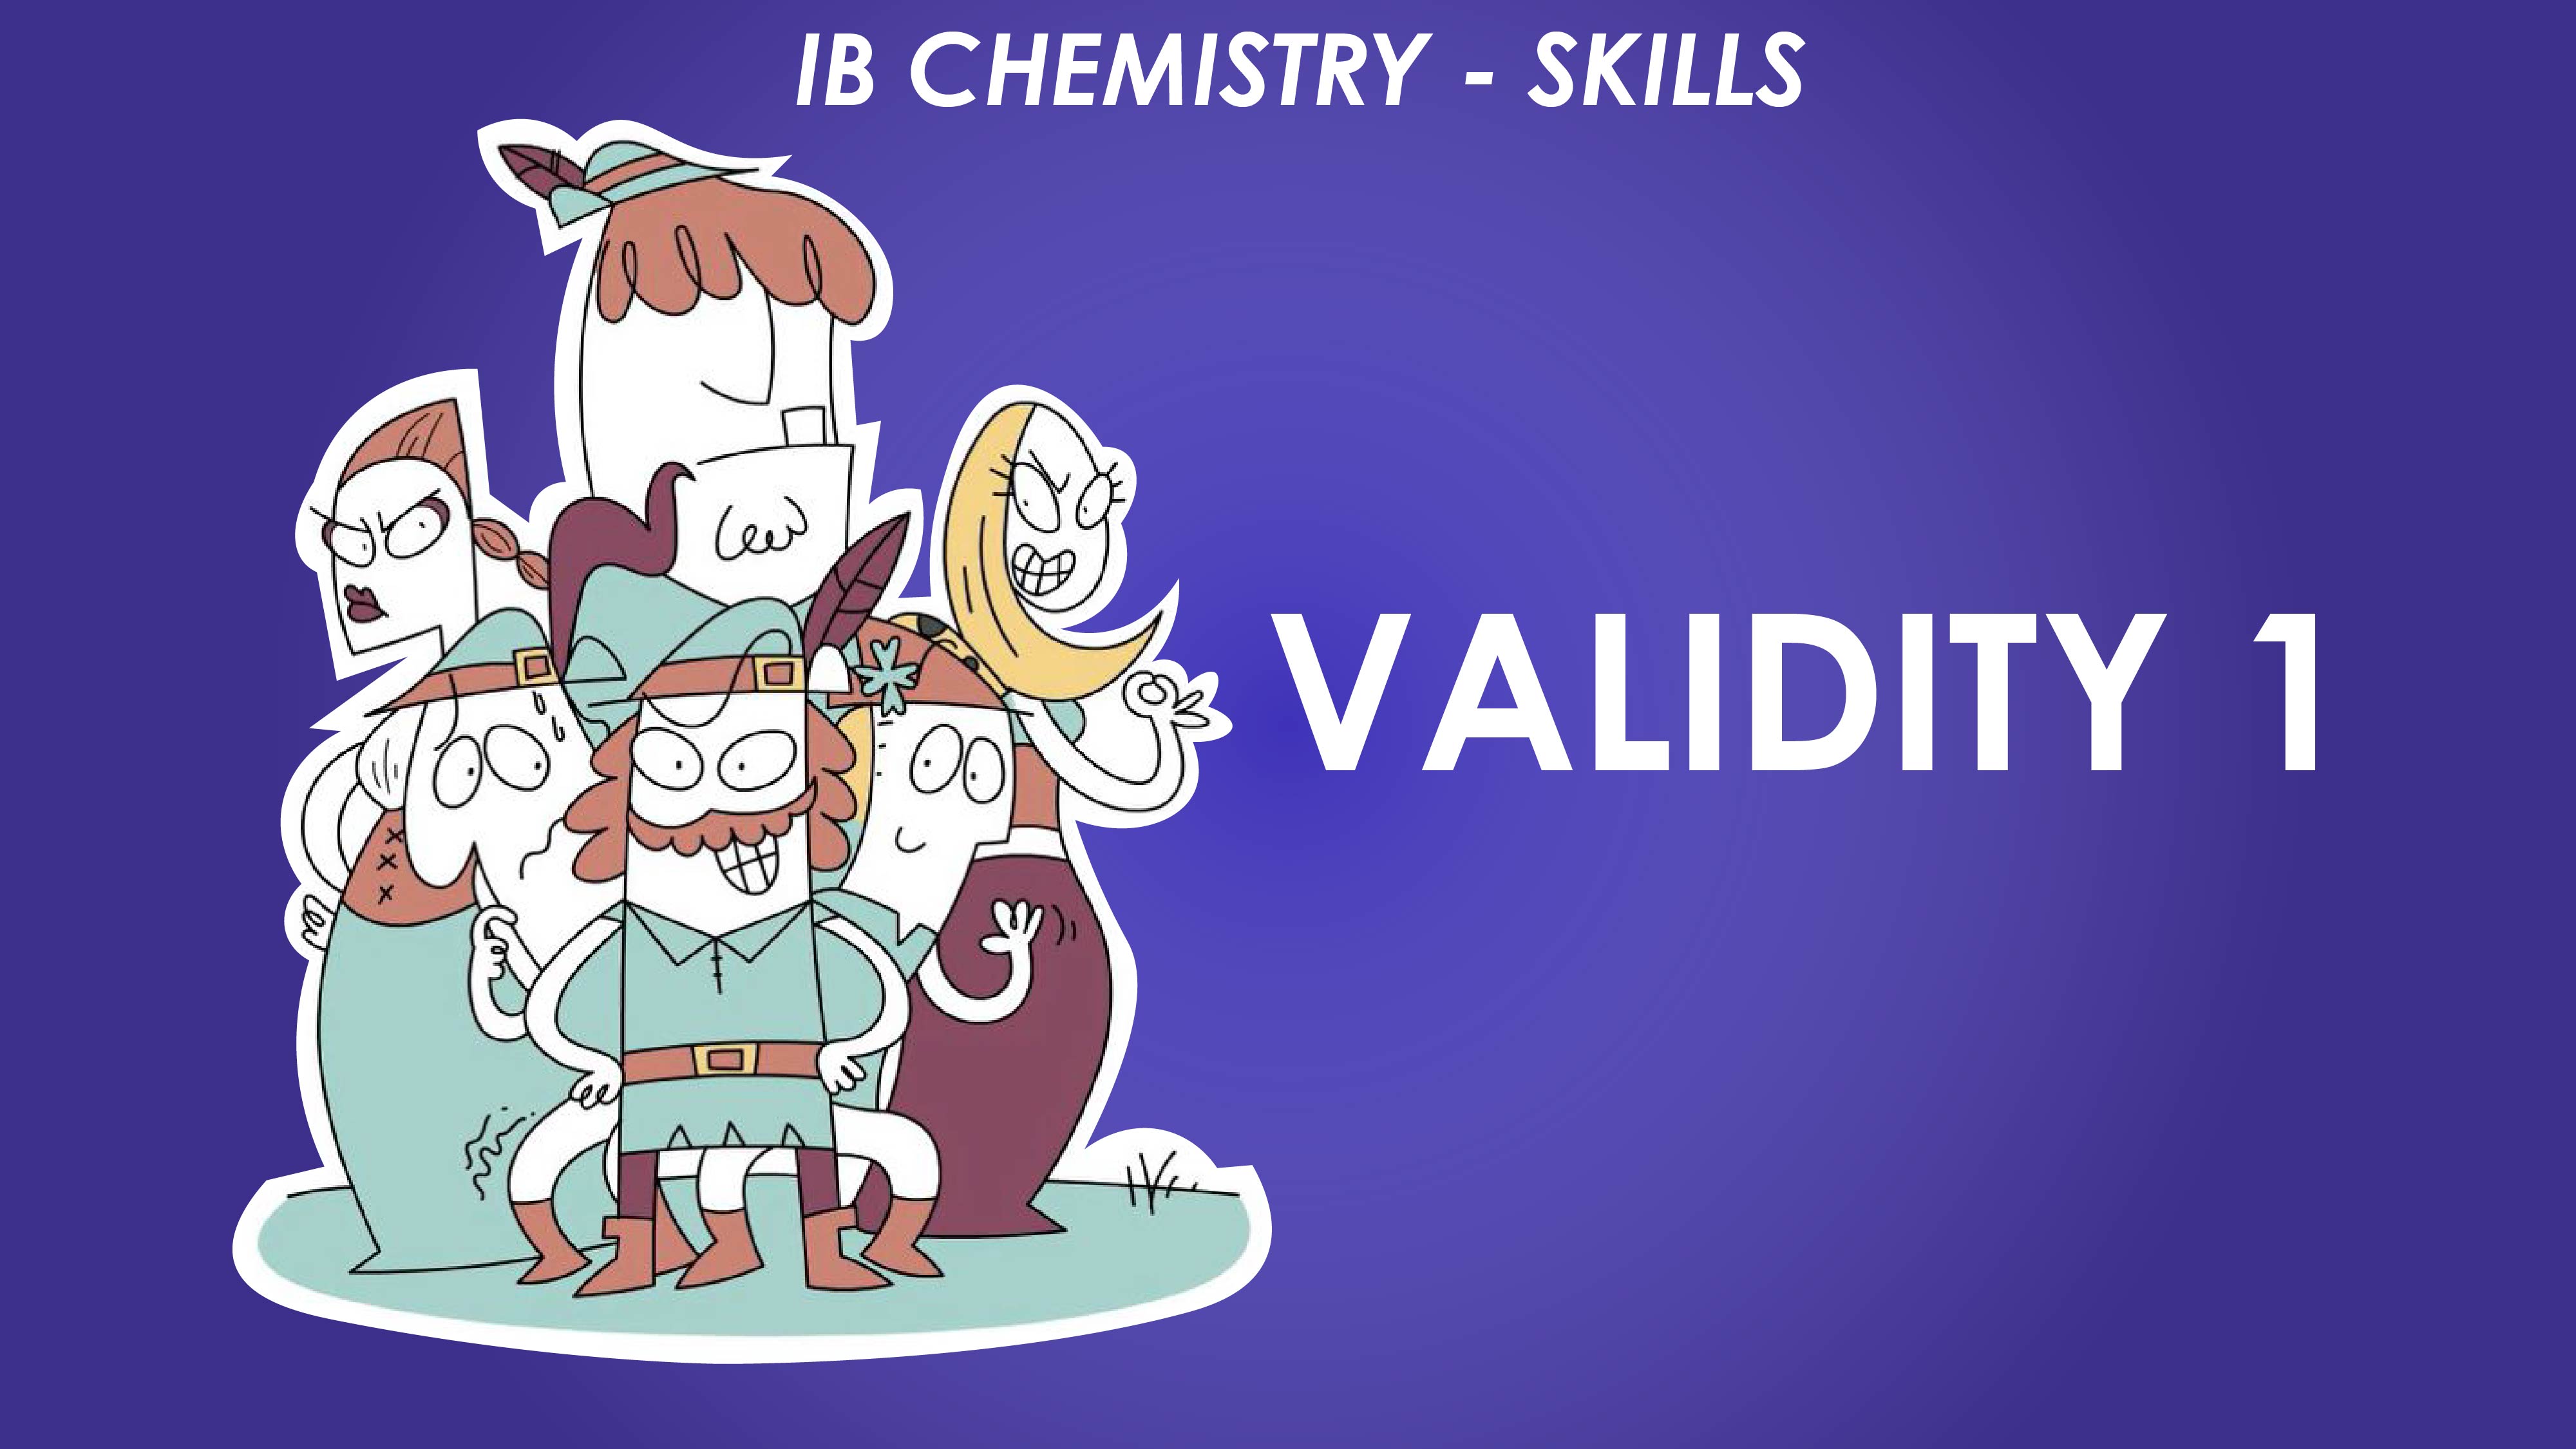 Validity 1 - IB Chemistry Skills